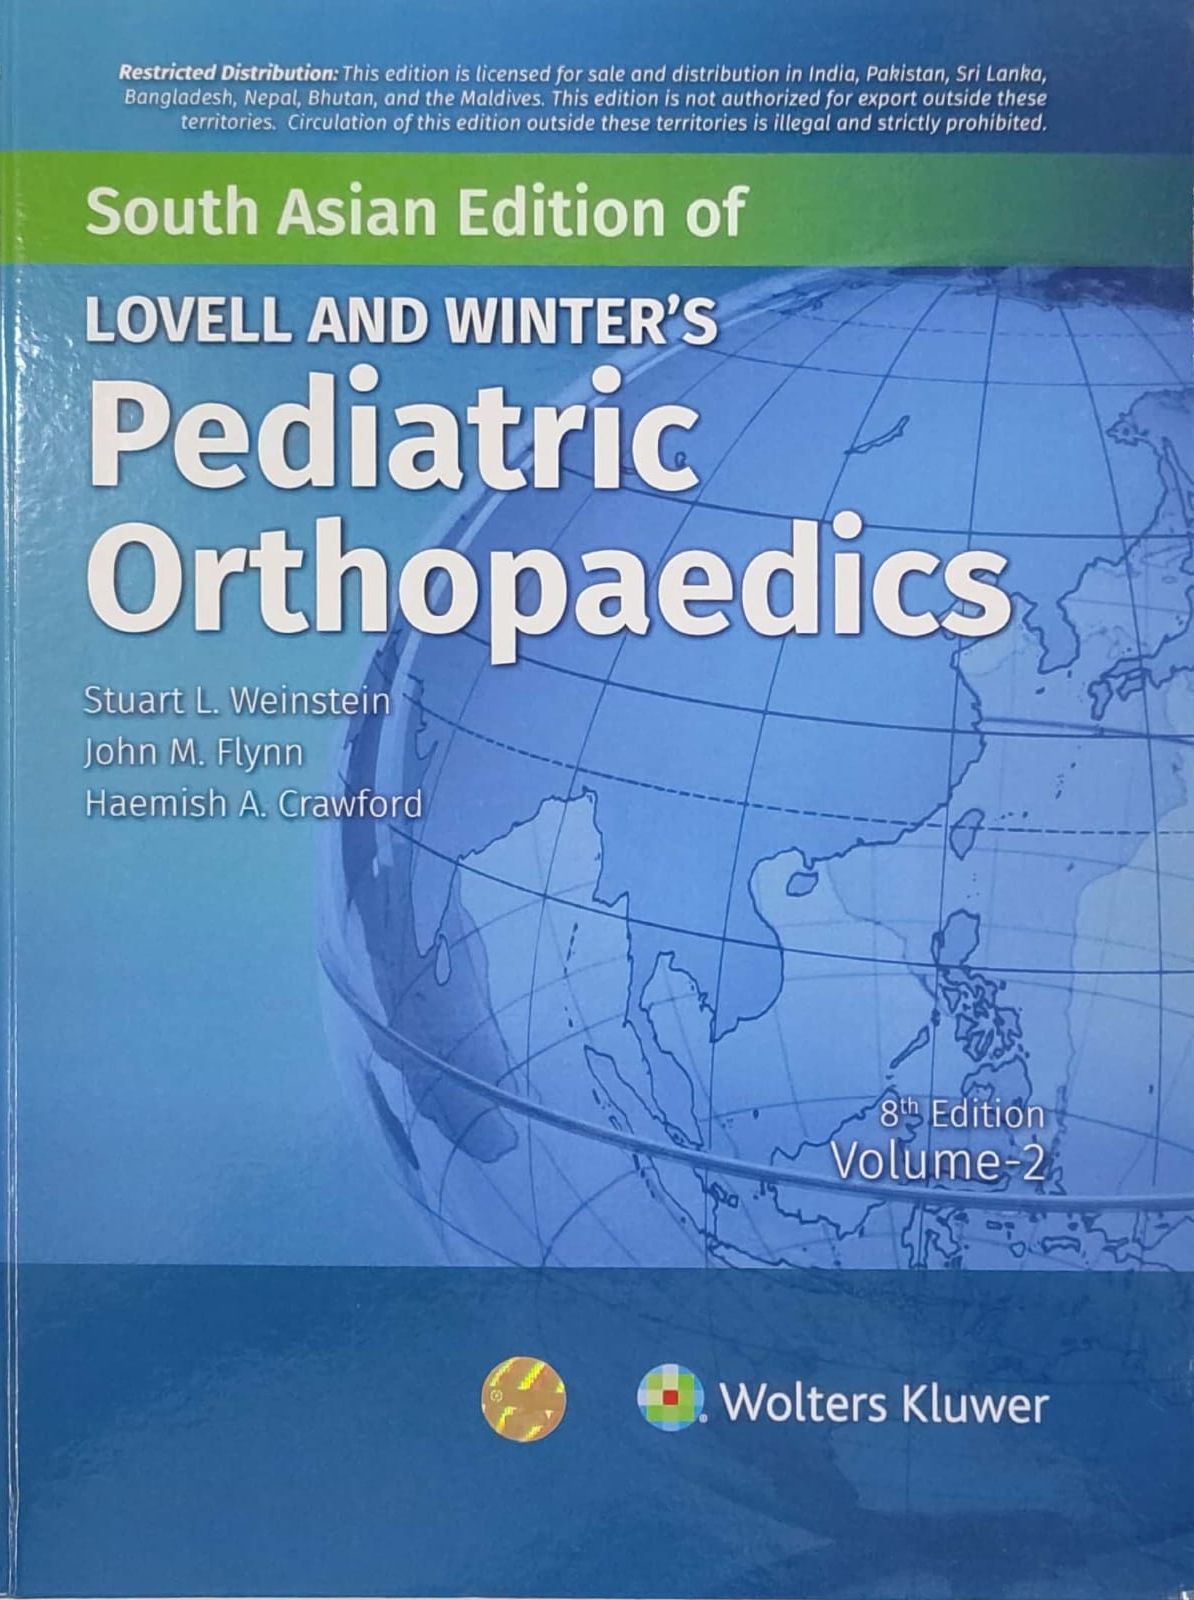 

surgical-sciences/orthopedics/lovell-and-winter-s-pediatric-orthopedics-8-ed-2-vols-9789395736107